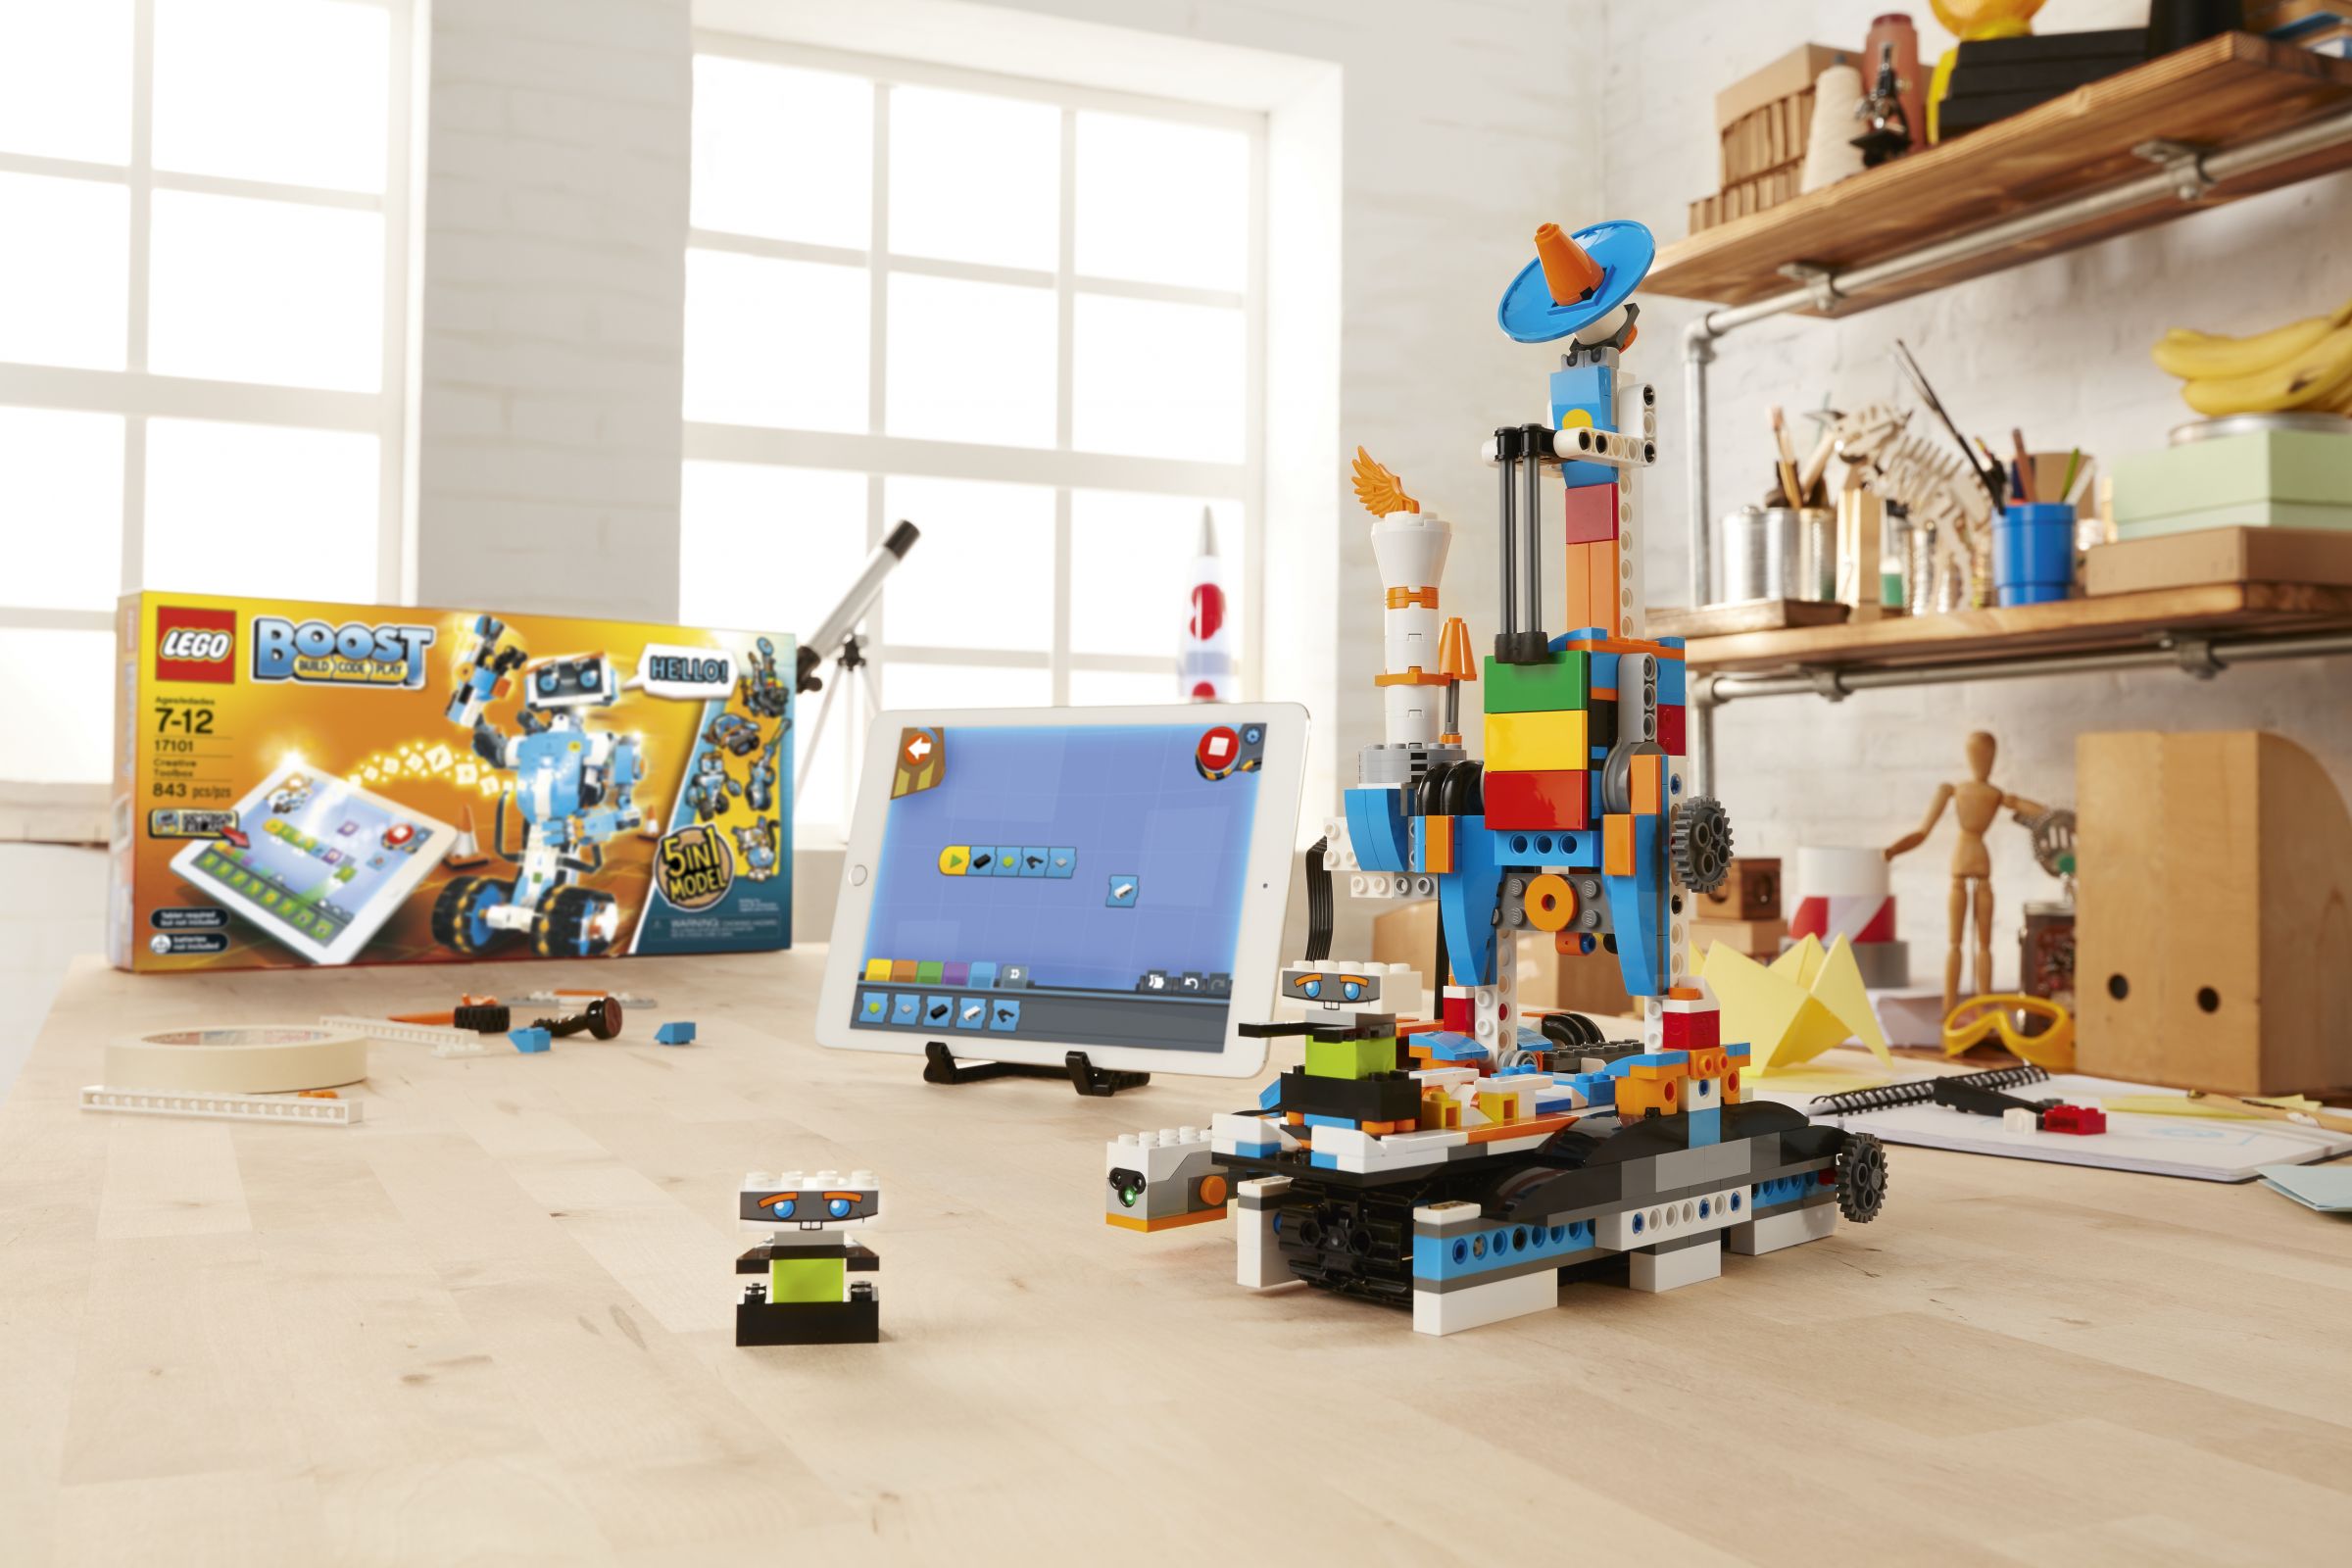 LEGO BOOST 17101 Programmierbares Roboticset LEGO_BOOST_FACTORY_ALONE_V021.jpg